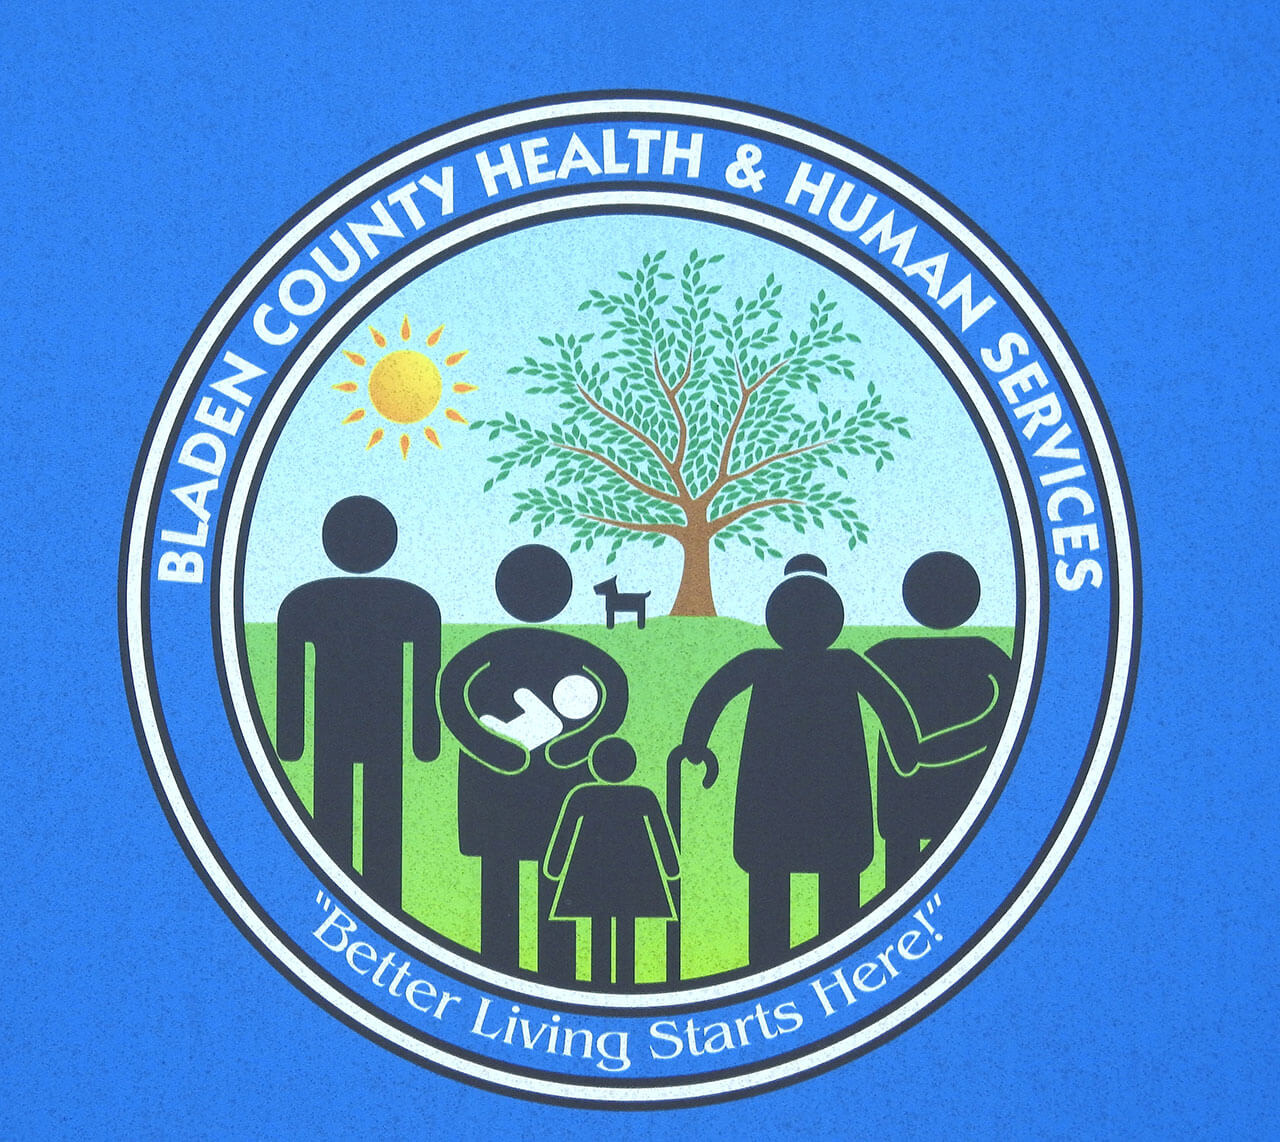 Bladen County health & Human Services